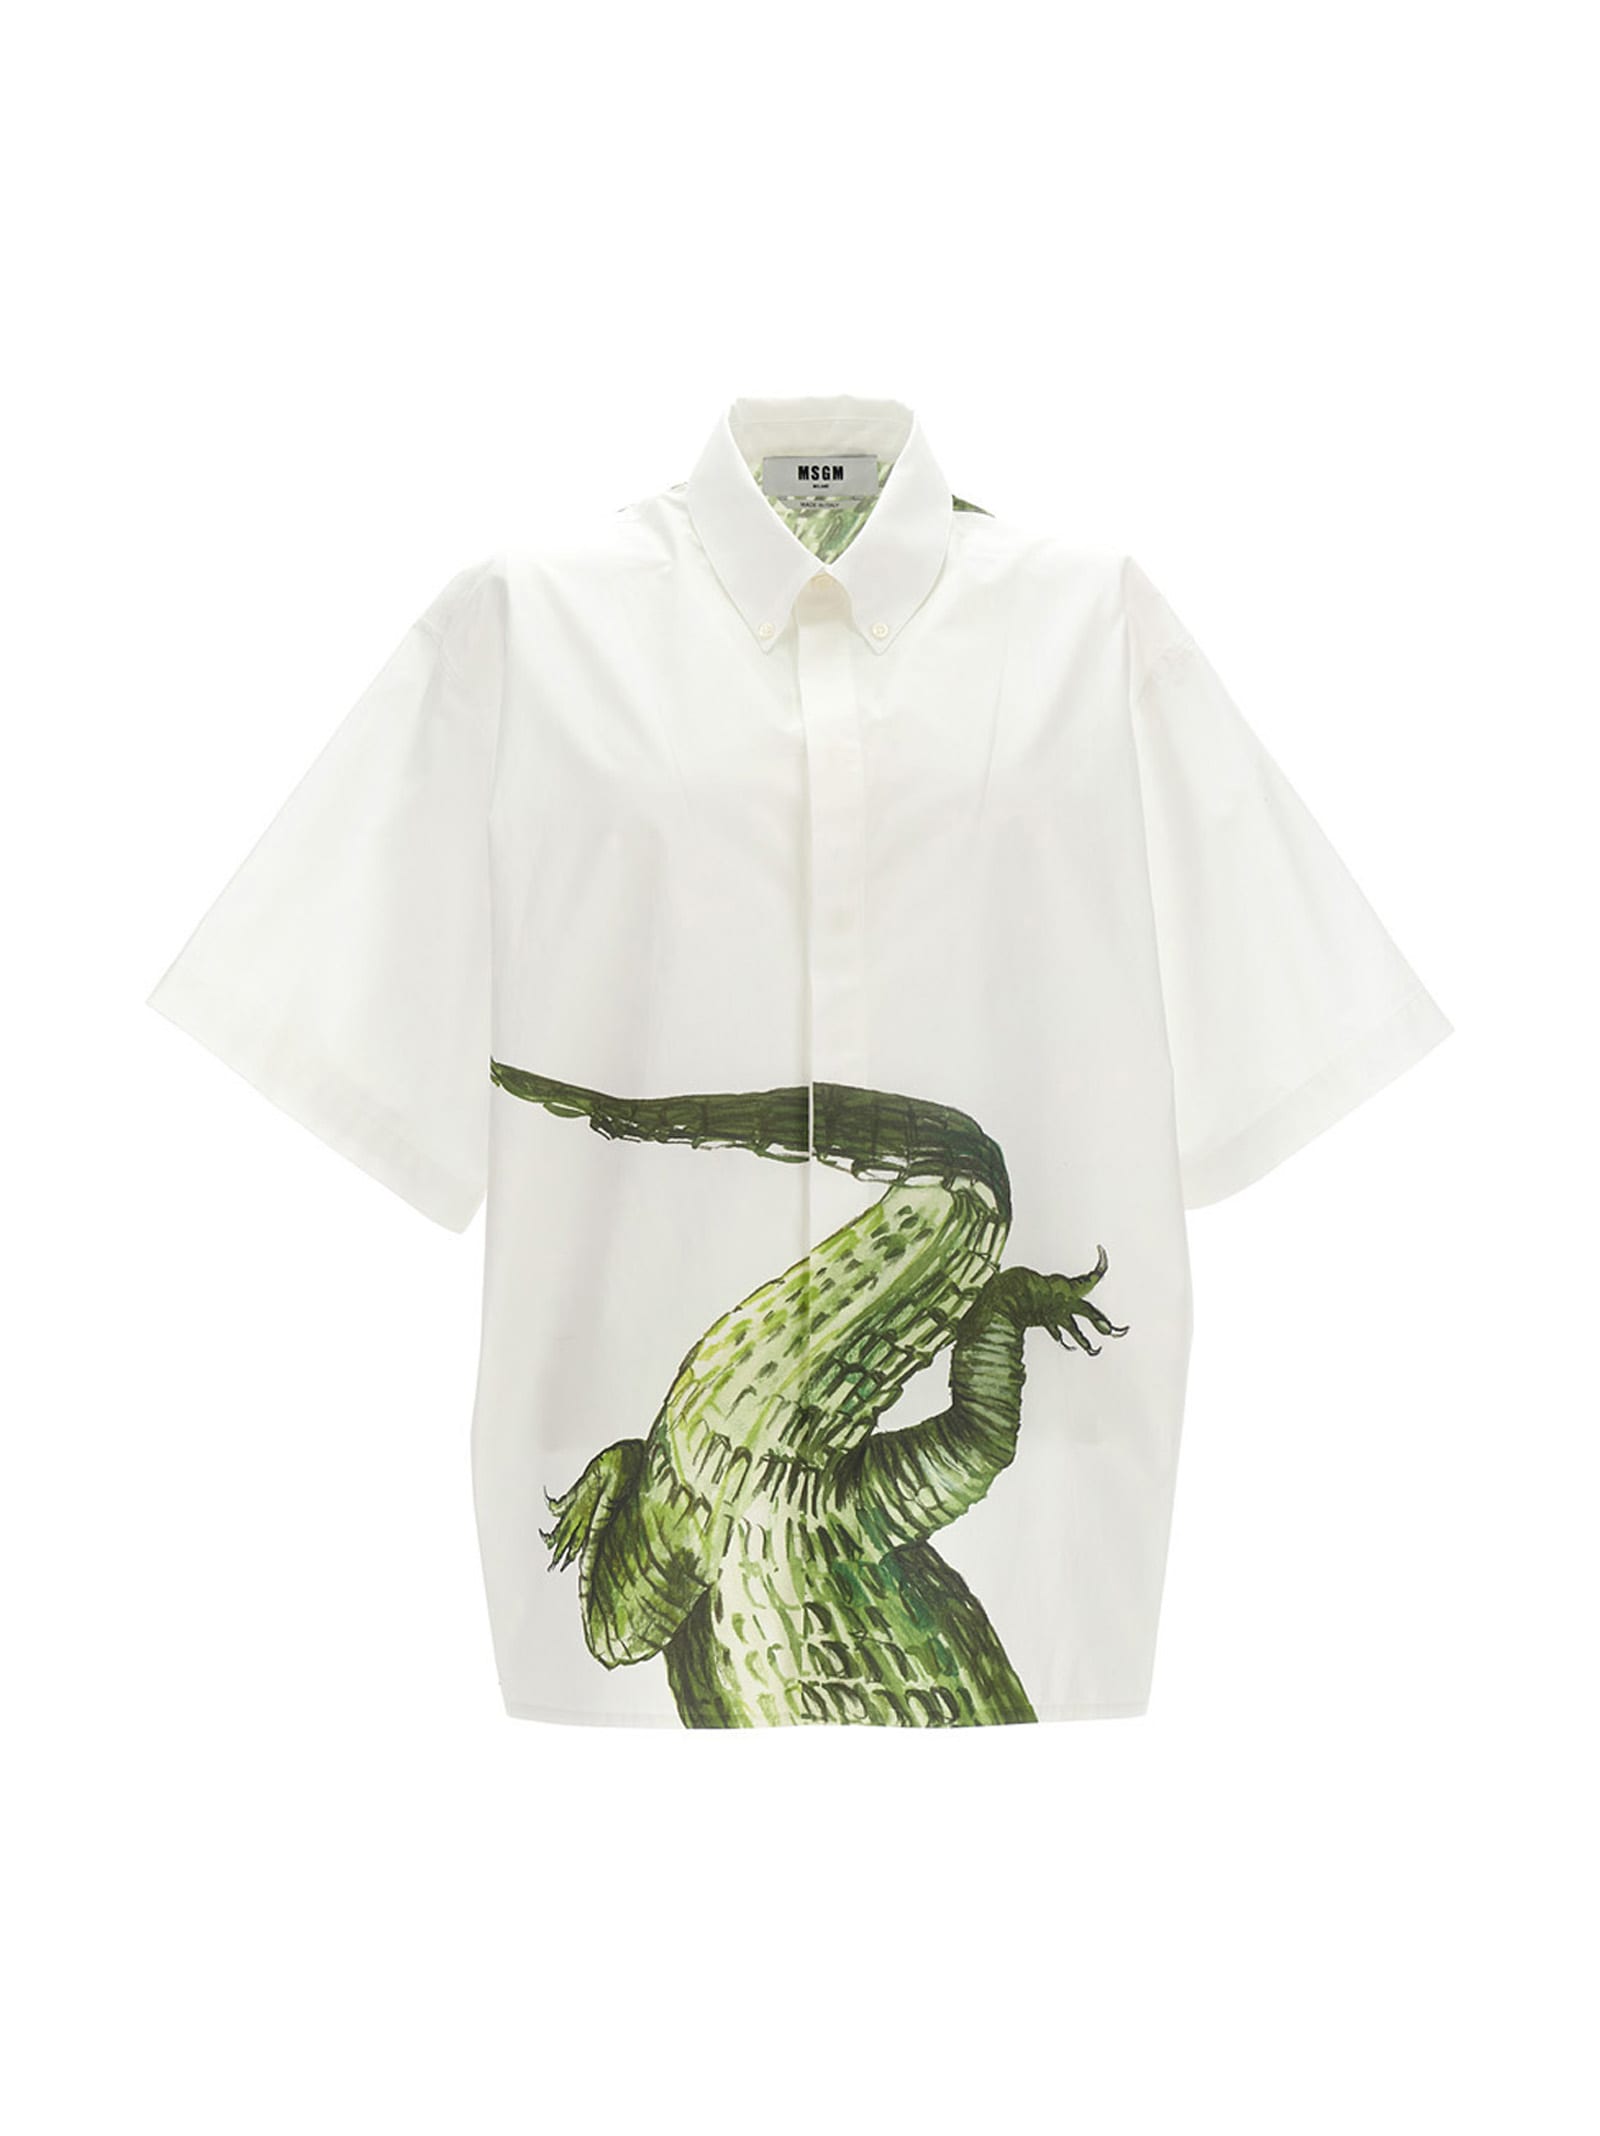 MSGM crocodile Shirt